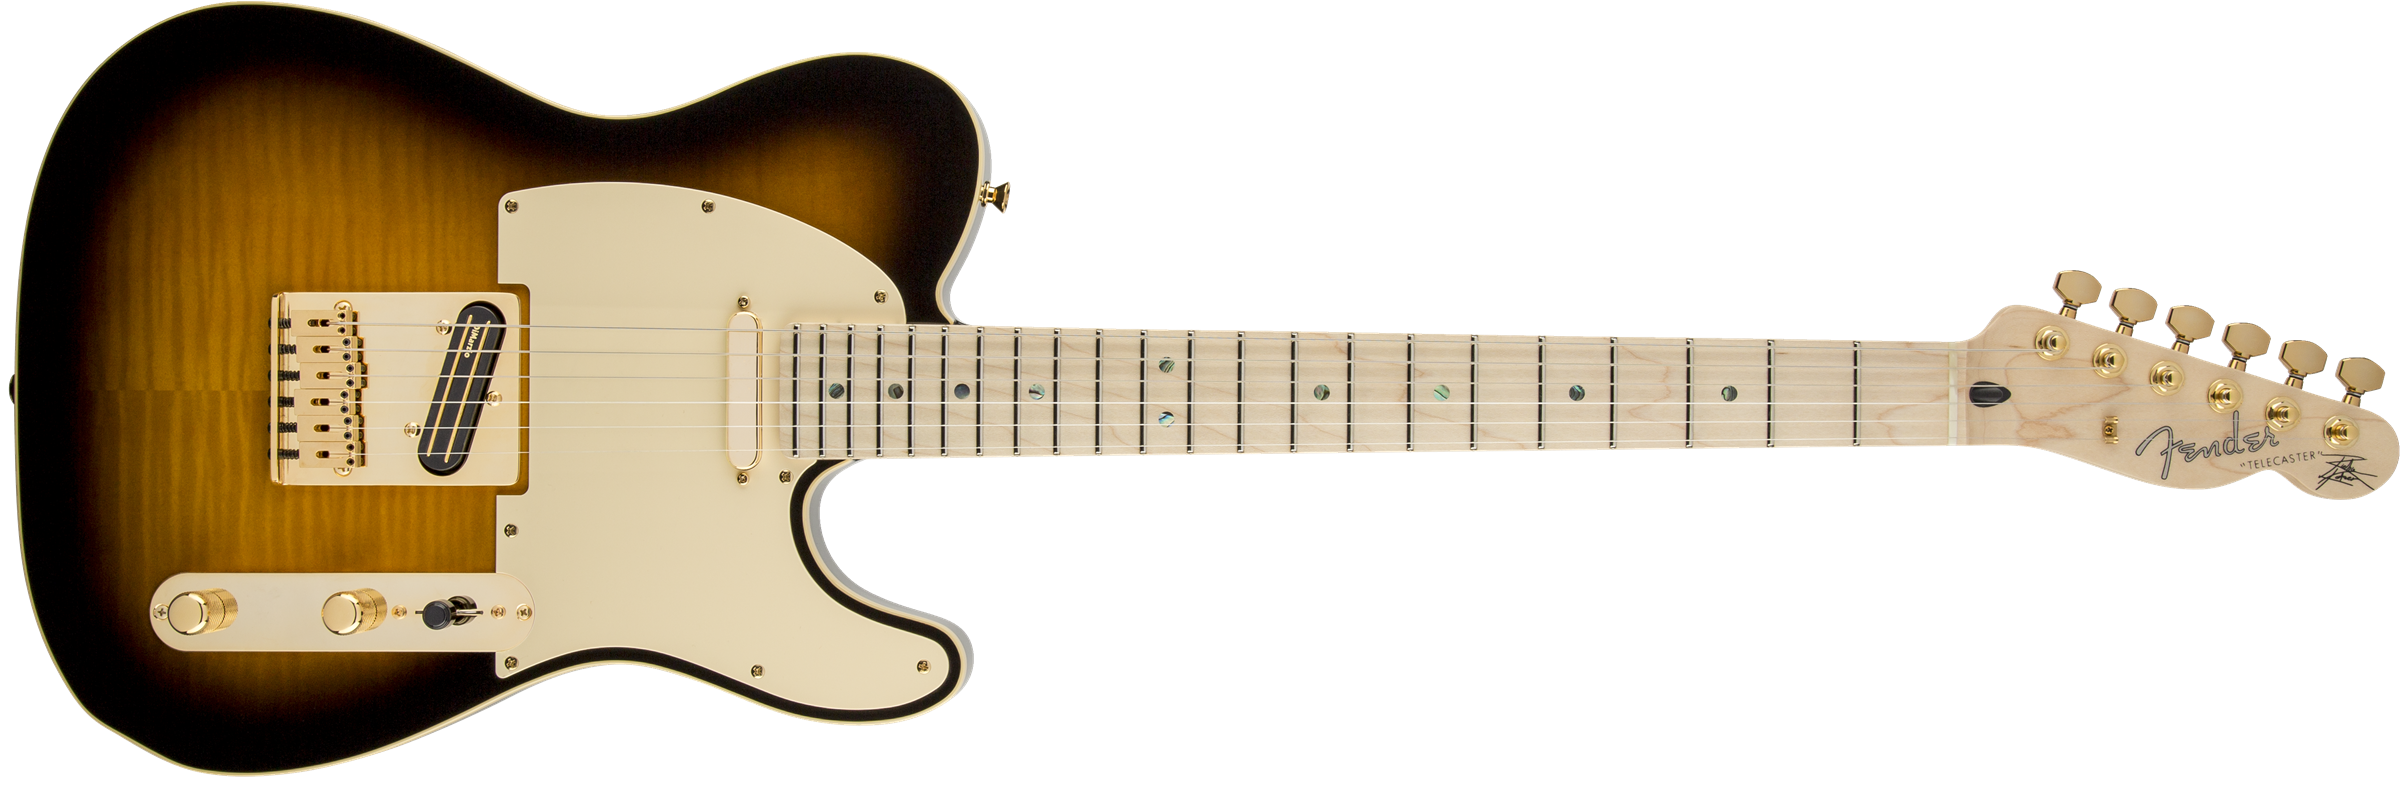 Fender Telecaster Richie Kotzen (jap, Mn) - Brown Sunburst - Guitarra eléctrica con forma de tel - Variation 1